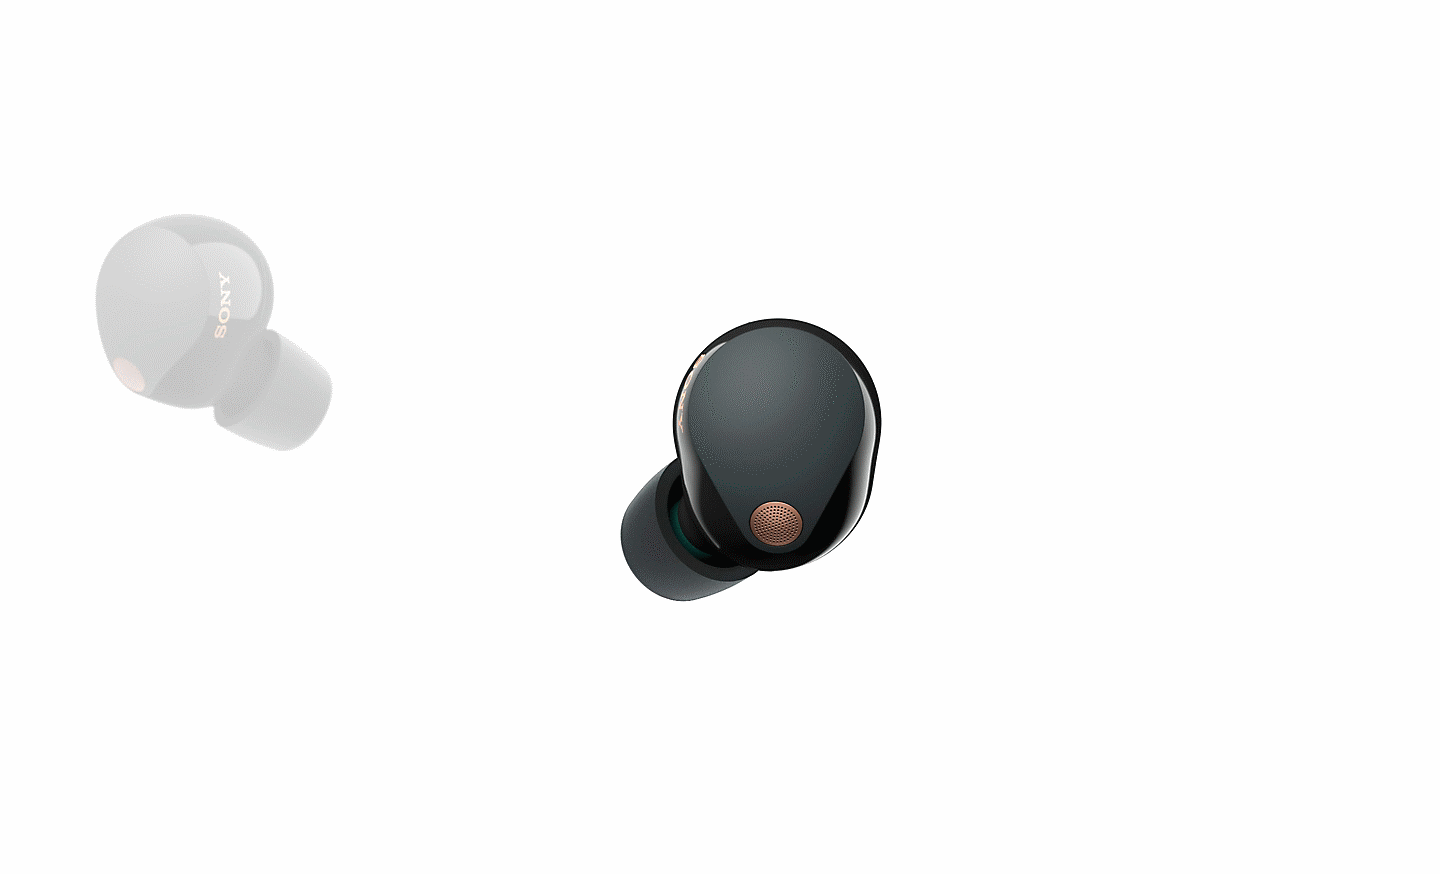 360 degree view of the WF-1000XM5 headphones